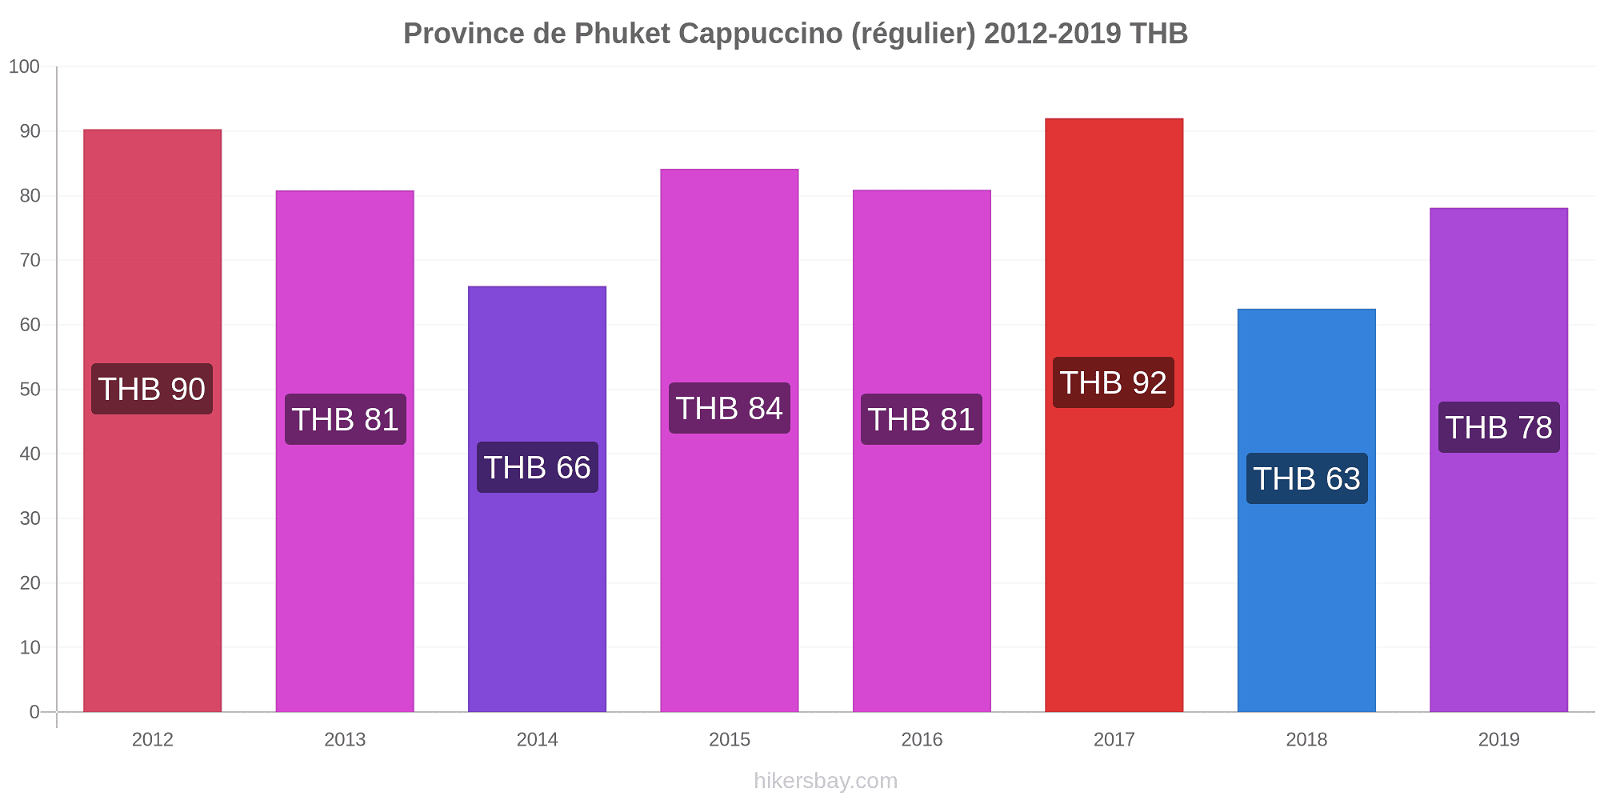 Province de Phuket changements de prix Cappuccino (régulier) hikersbay.com